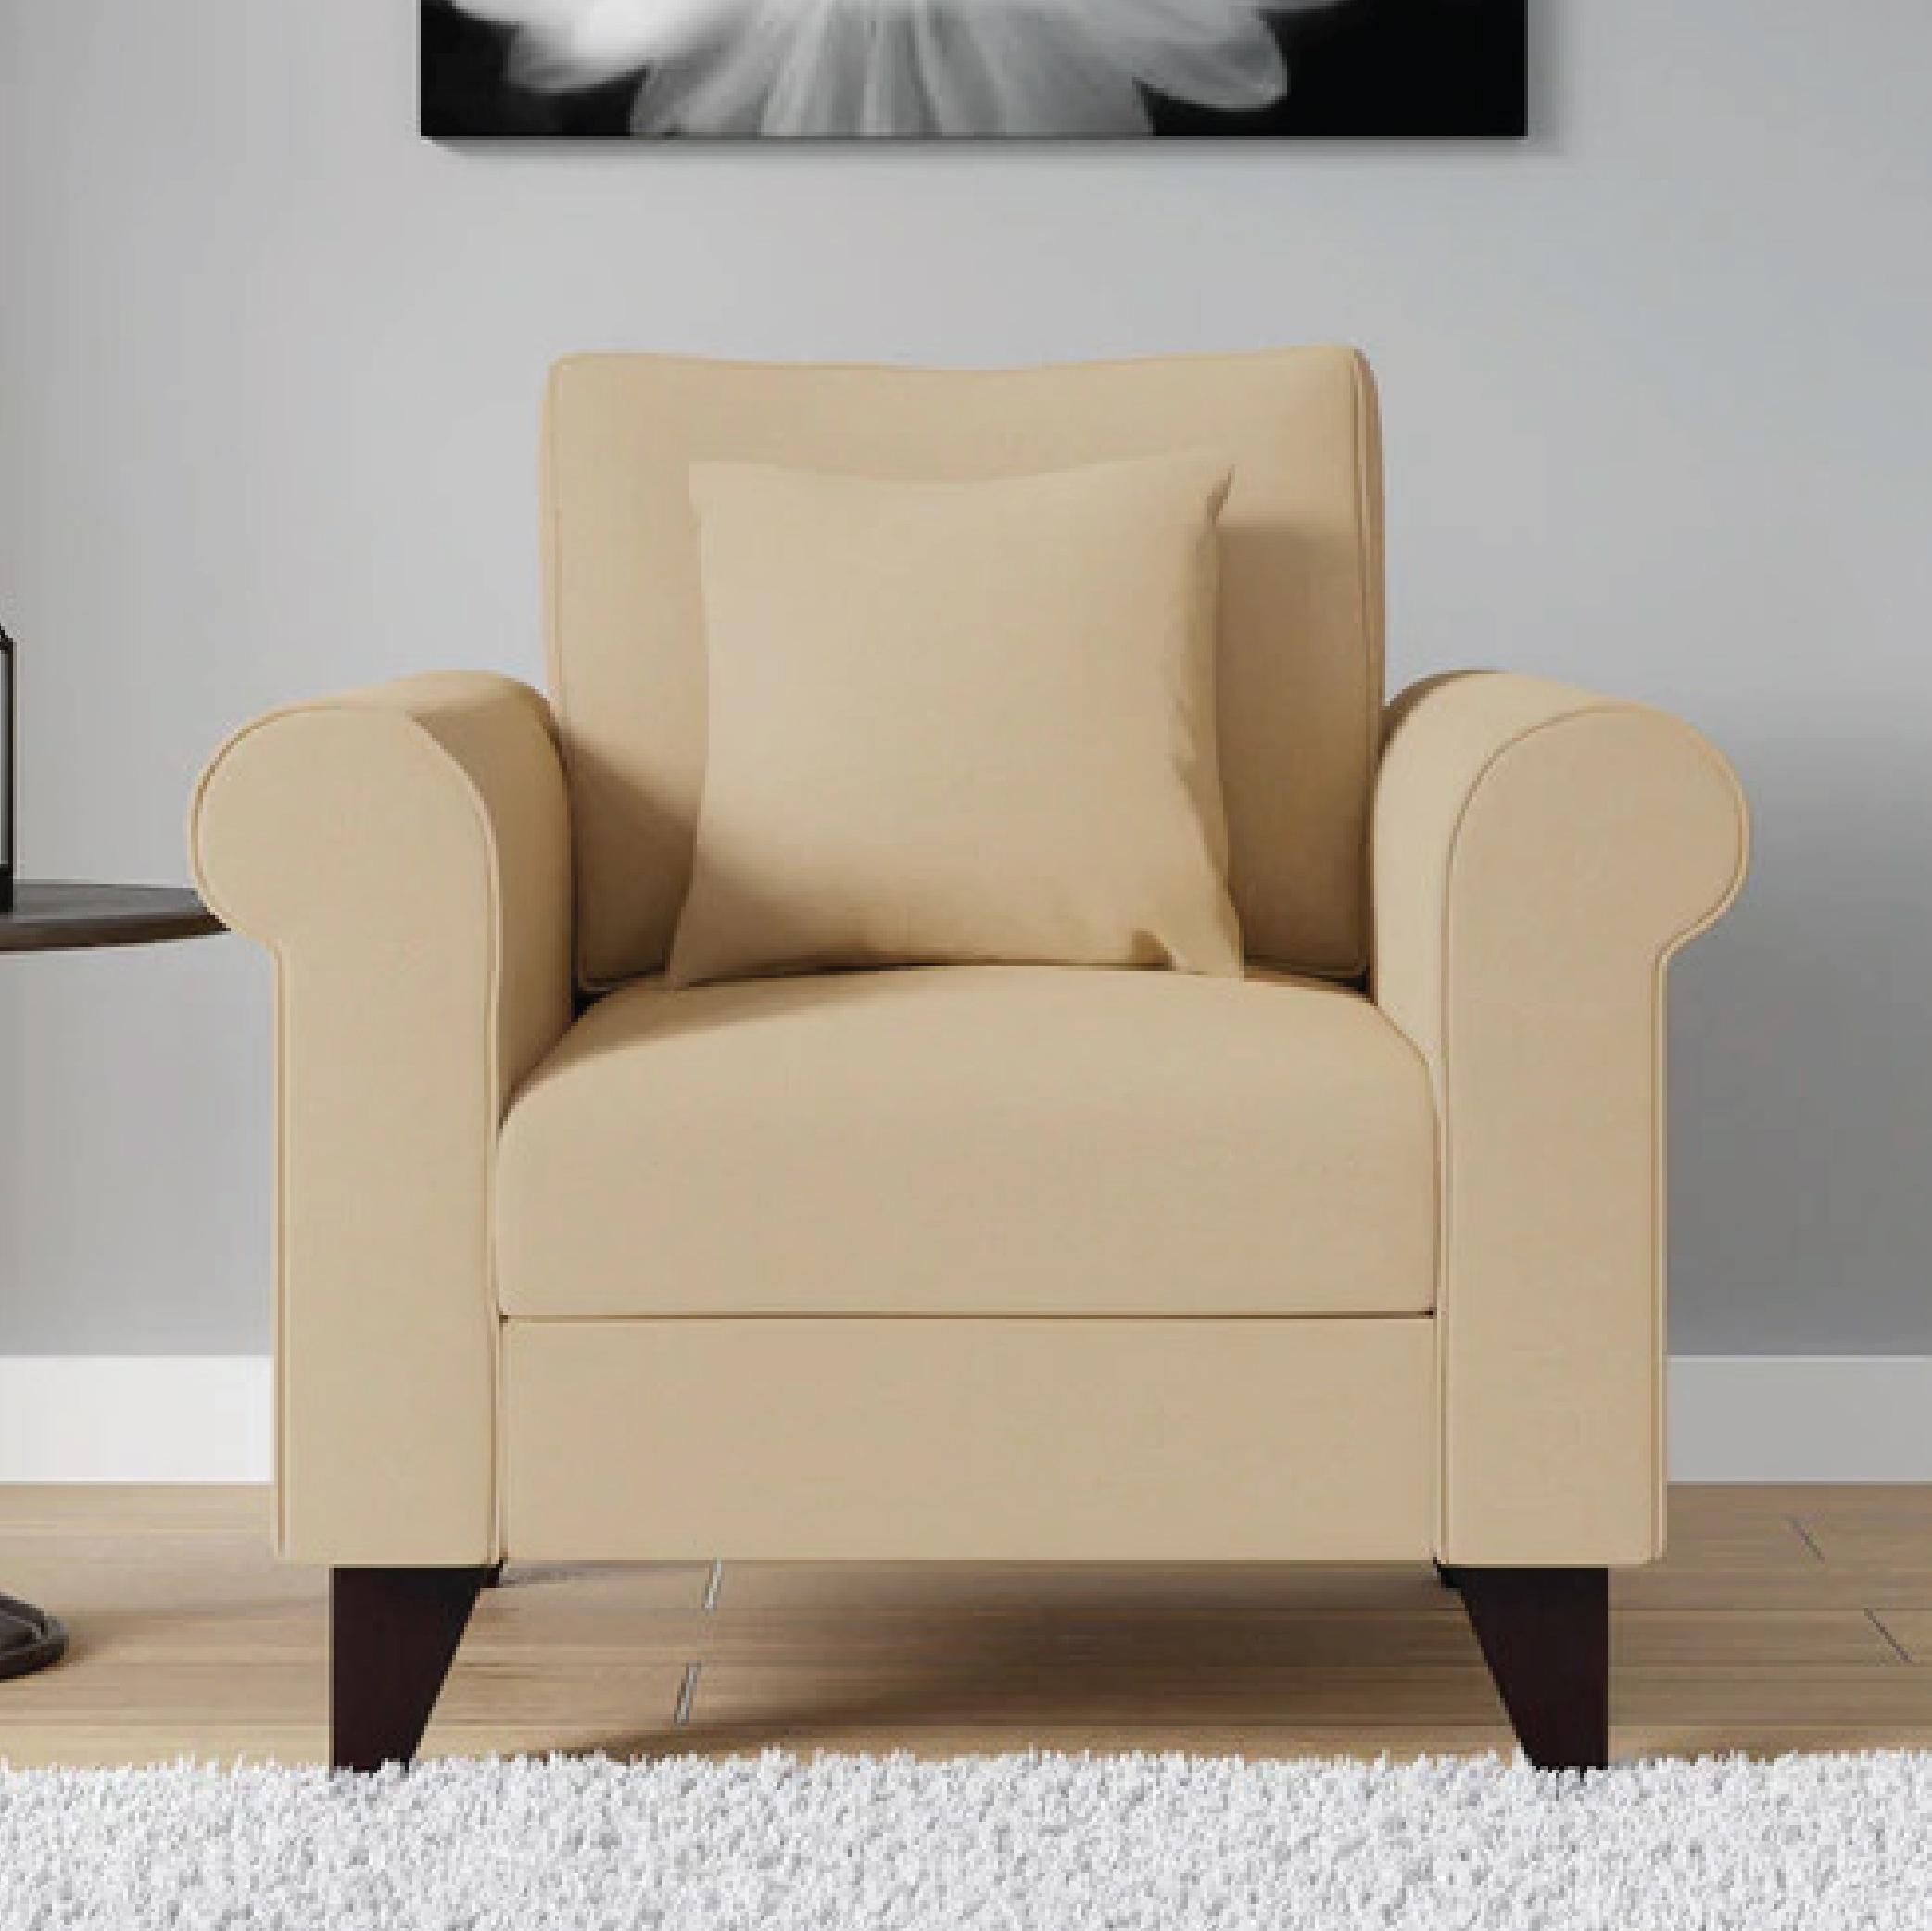 Sarno One Seater Sofa in Beige Colour